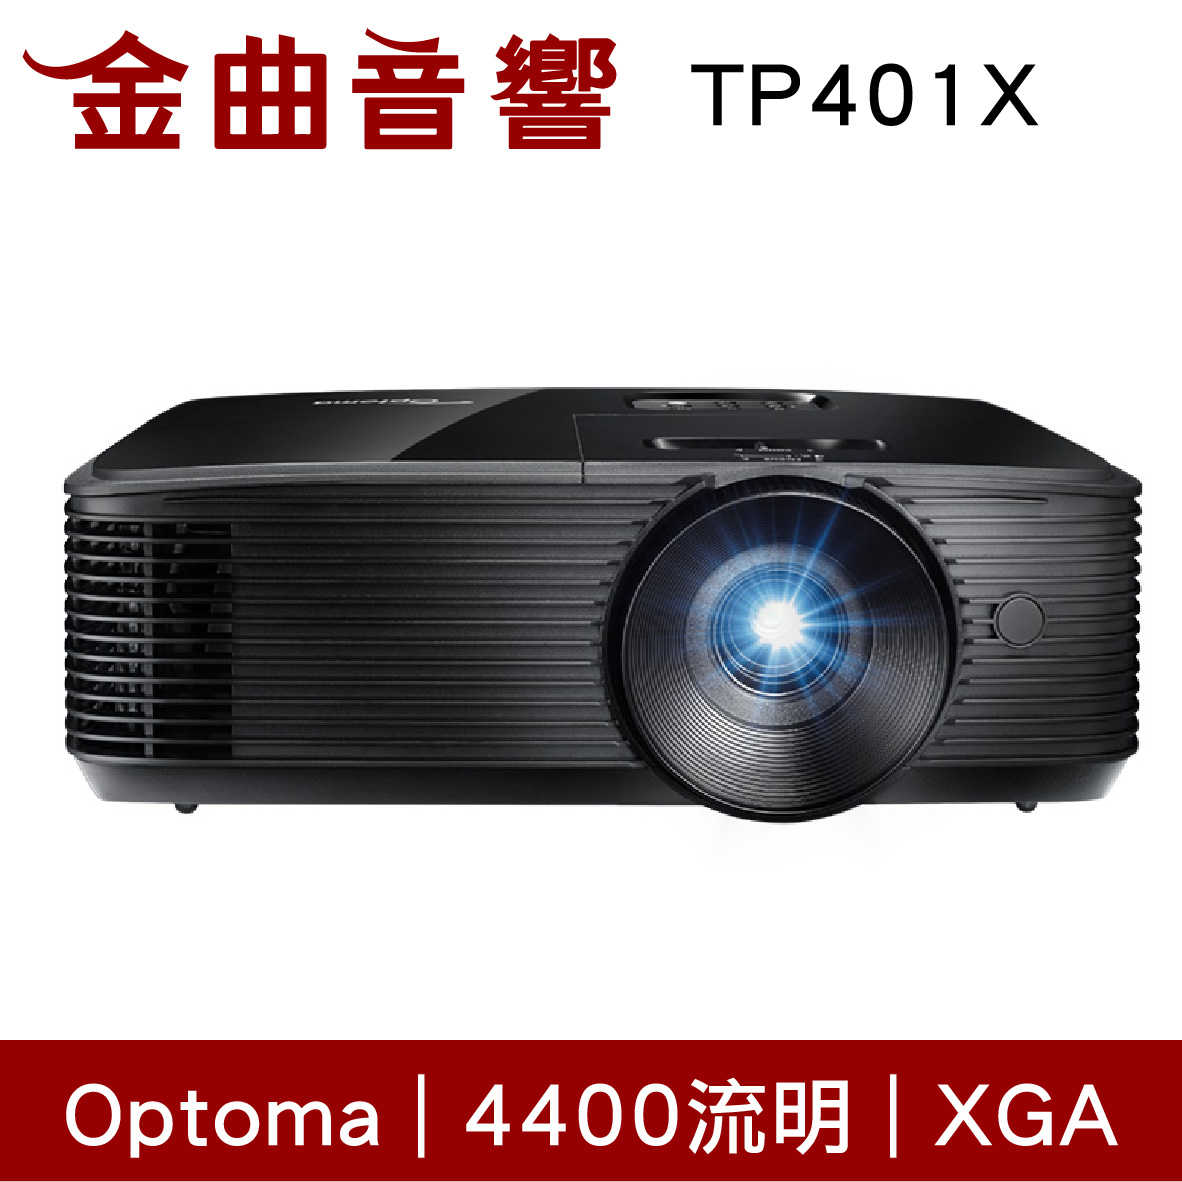 Optoma 奧圖碼 TP401X 商用 會議 教學 4400流明 XGA 多功能 投影機 | 金曲音響